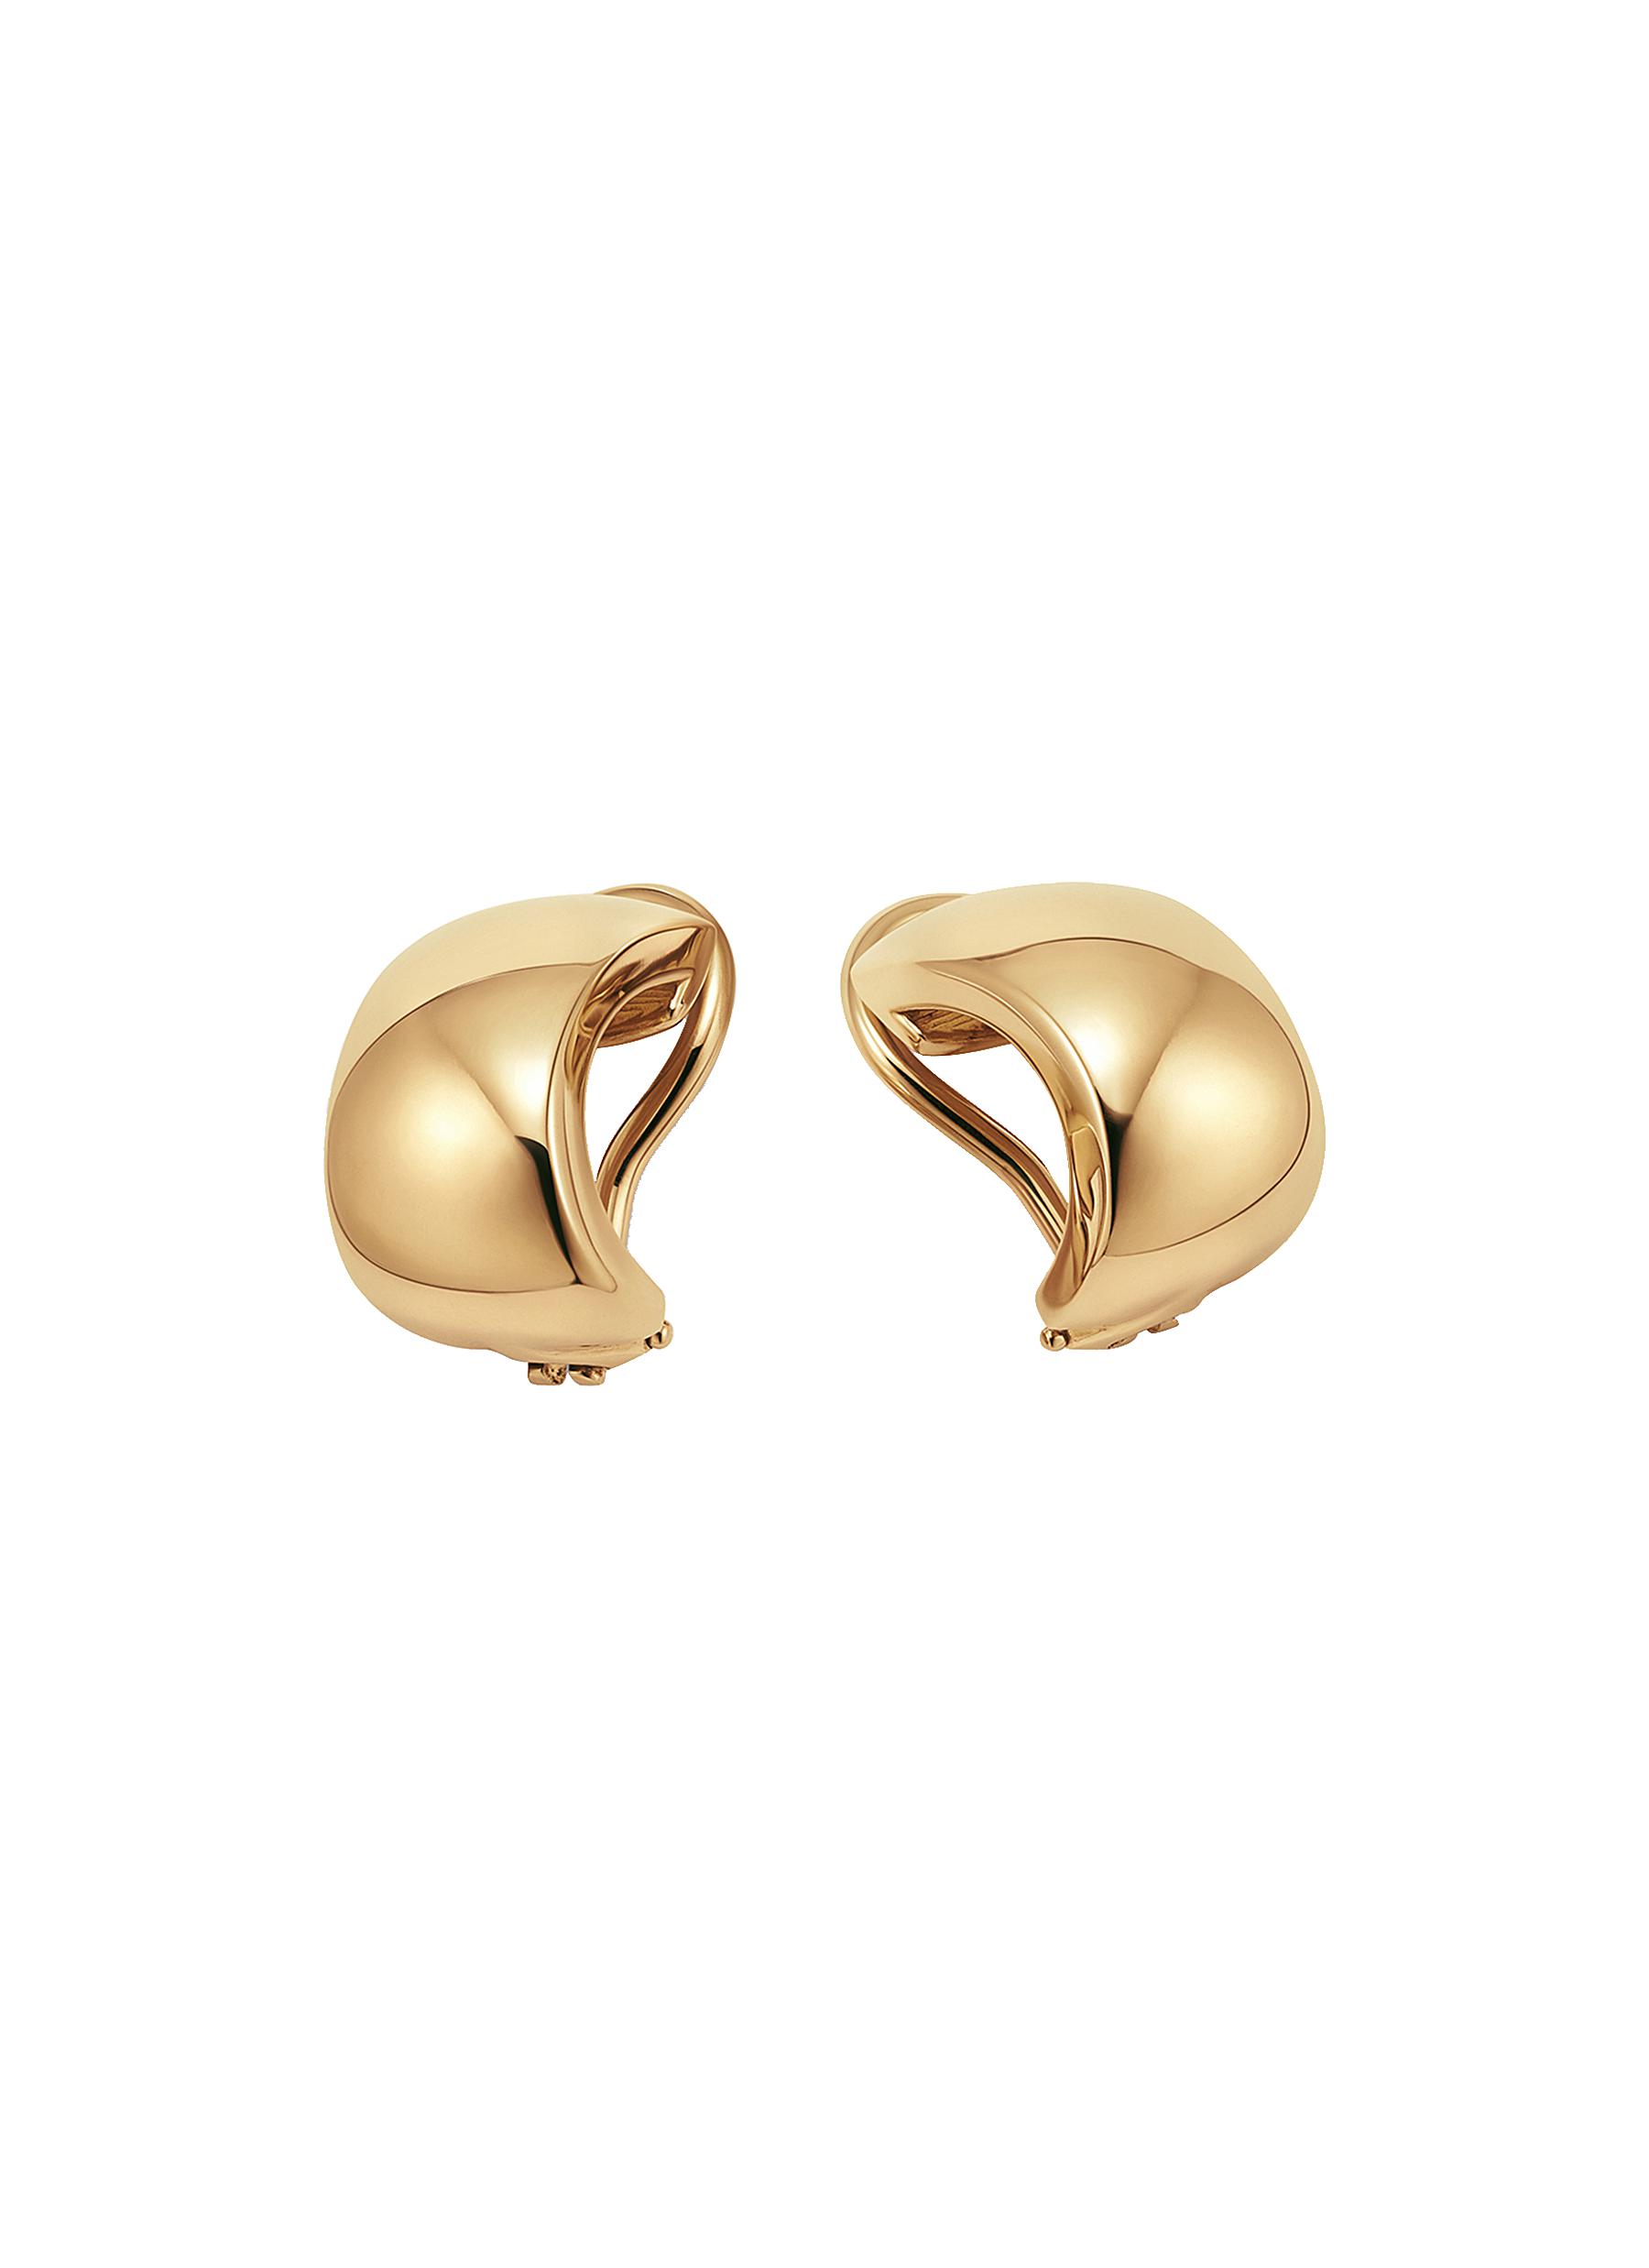 FUTURA ‘Uptown' 18k fairmined ecological gold huggie earrings